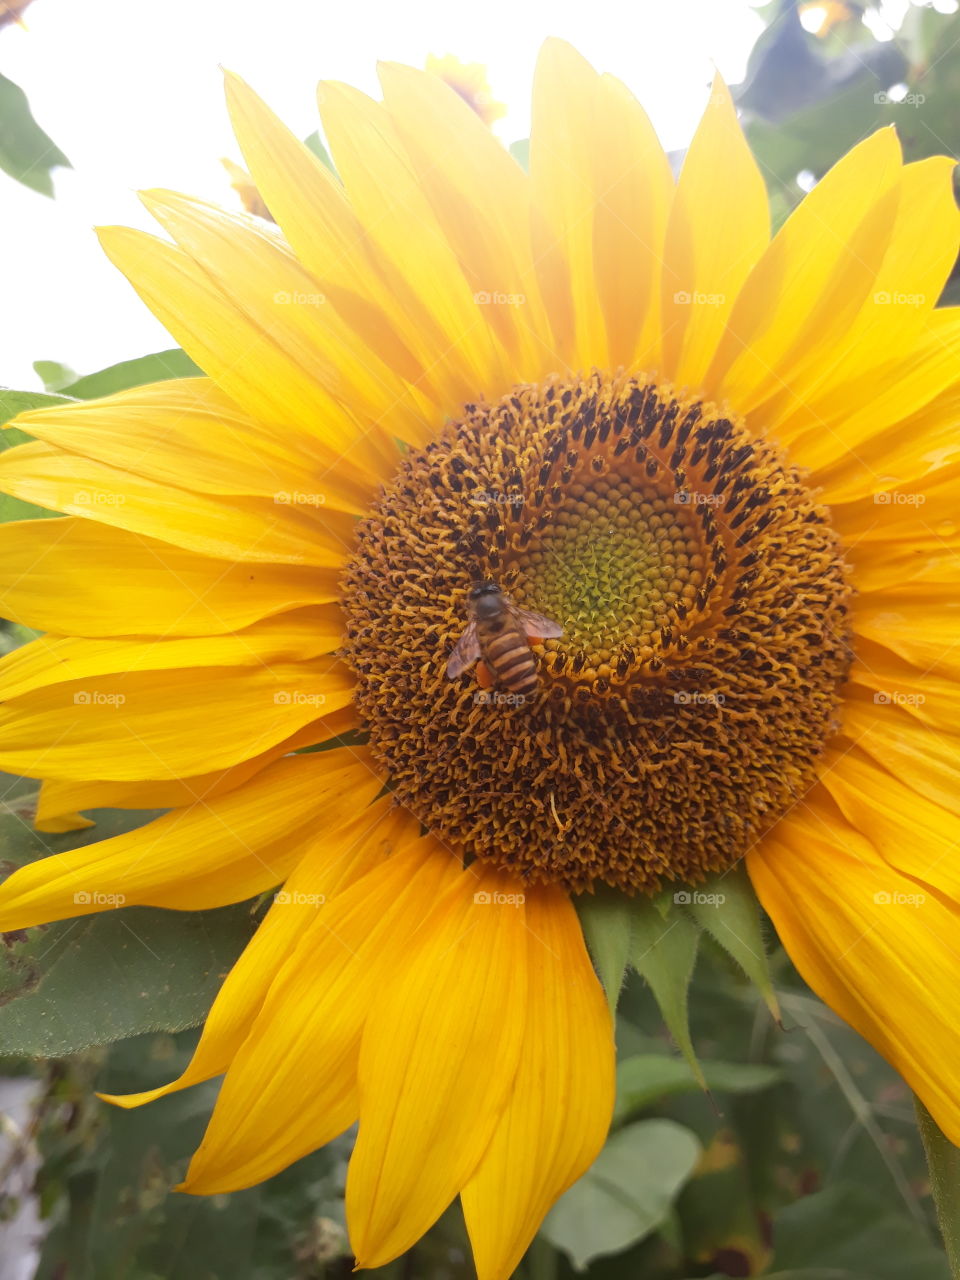 Shinny Sunflower and Bee.